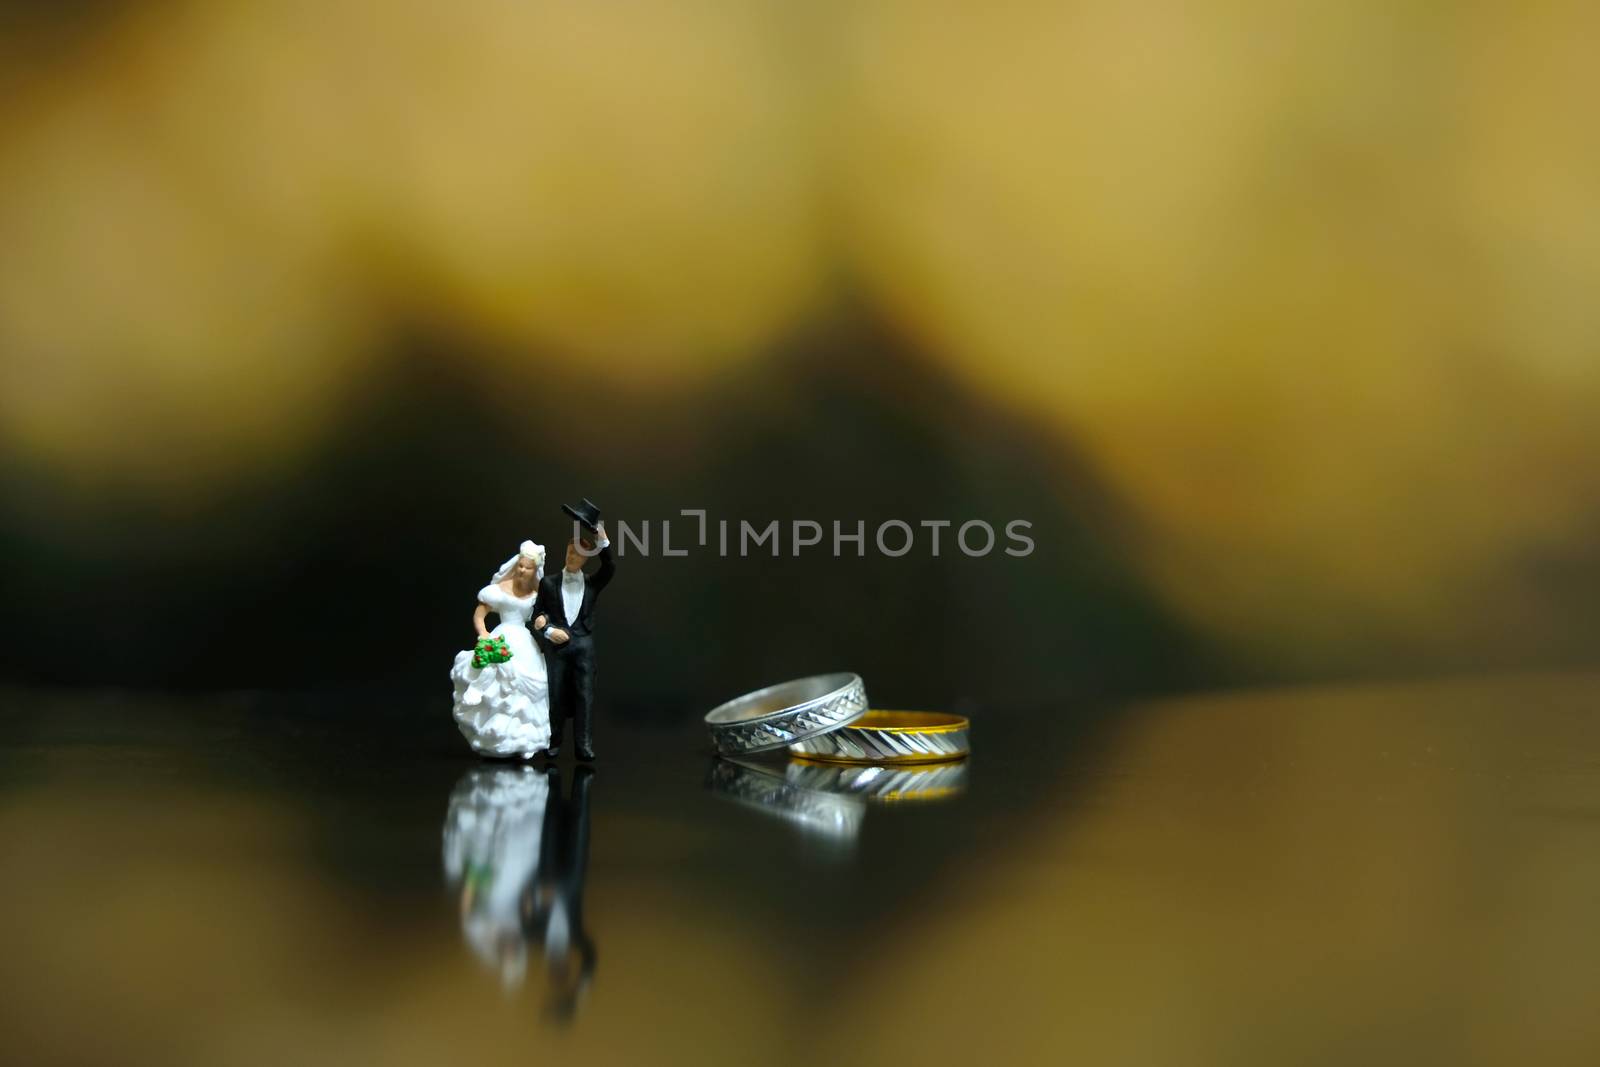 Miniature wedding concept - bride and groom walking on shiny floor beside their golden wedding ring by Macrostud